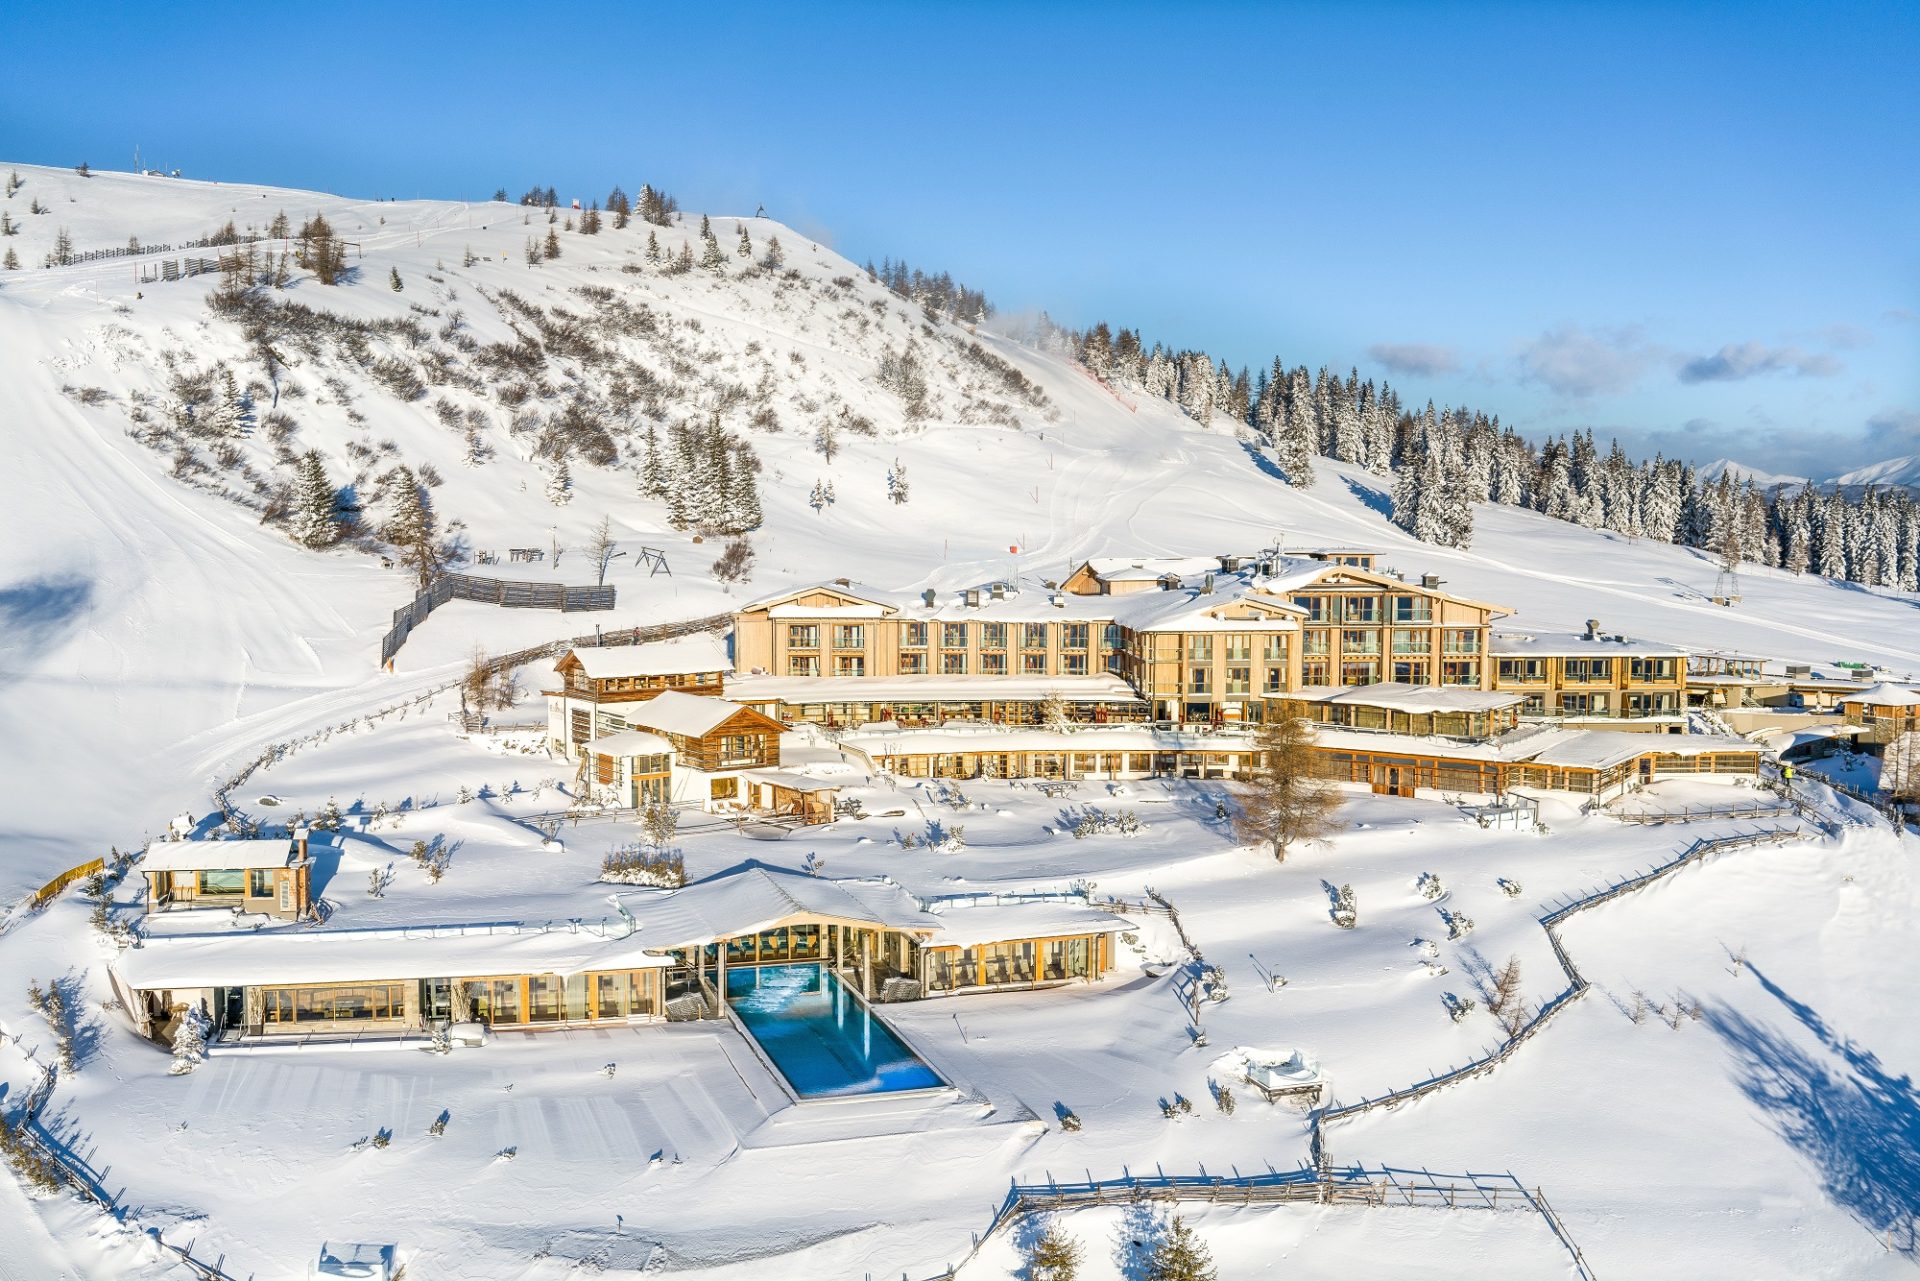 (c) Feuerberg Mountain Resort - Ski Hotel mit Outdoor Pool